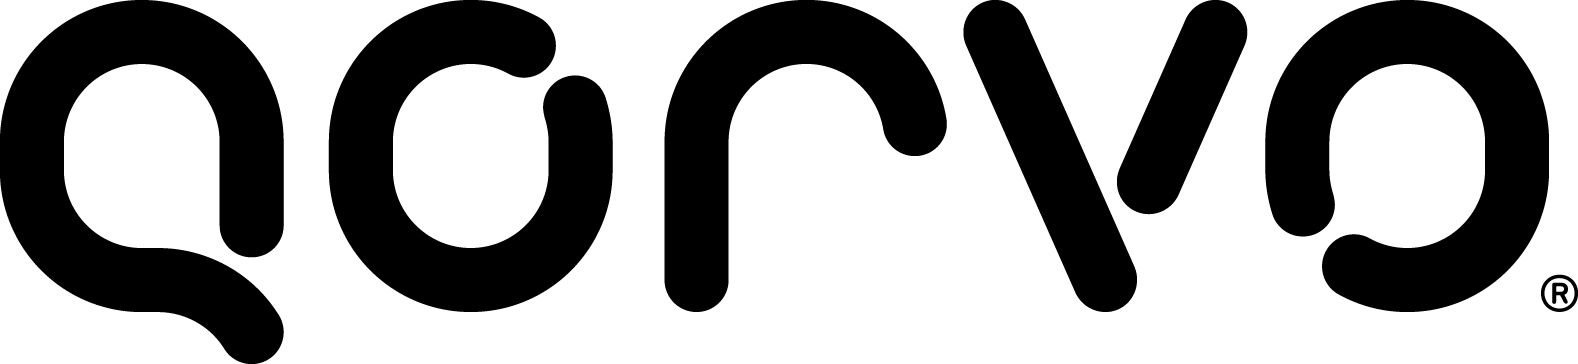 Qorvo Logo png